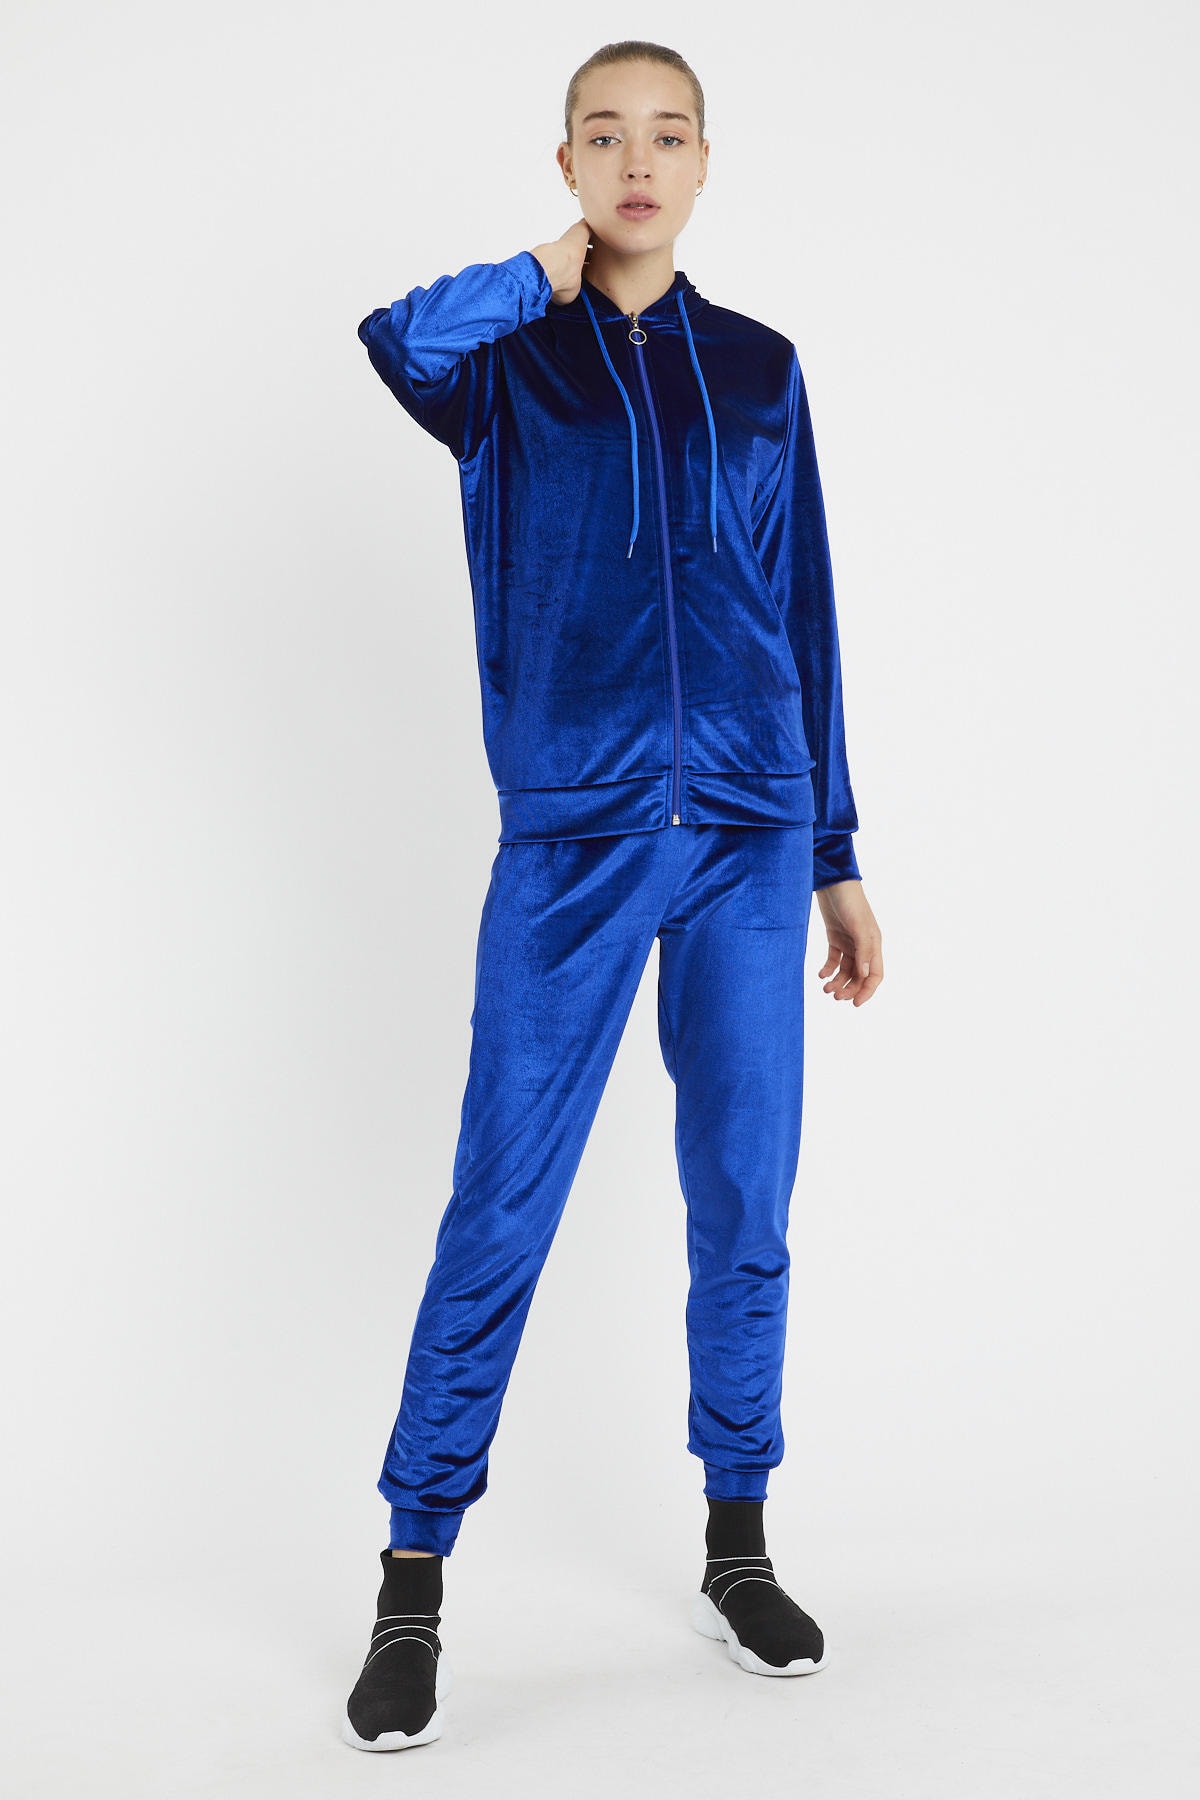 Unisex Hooded Track Suit (Royal Blue)